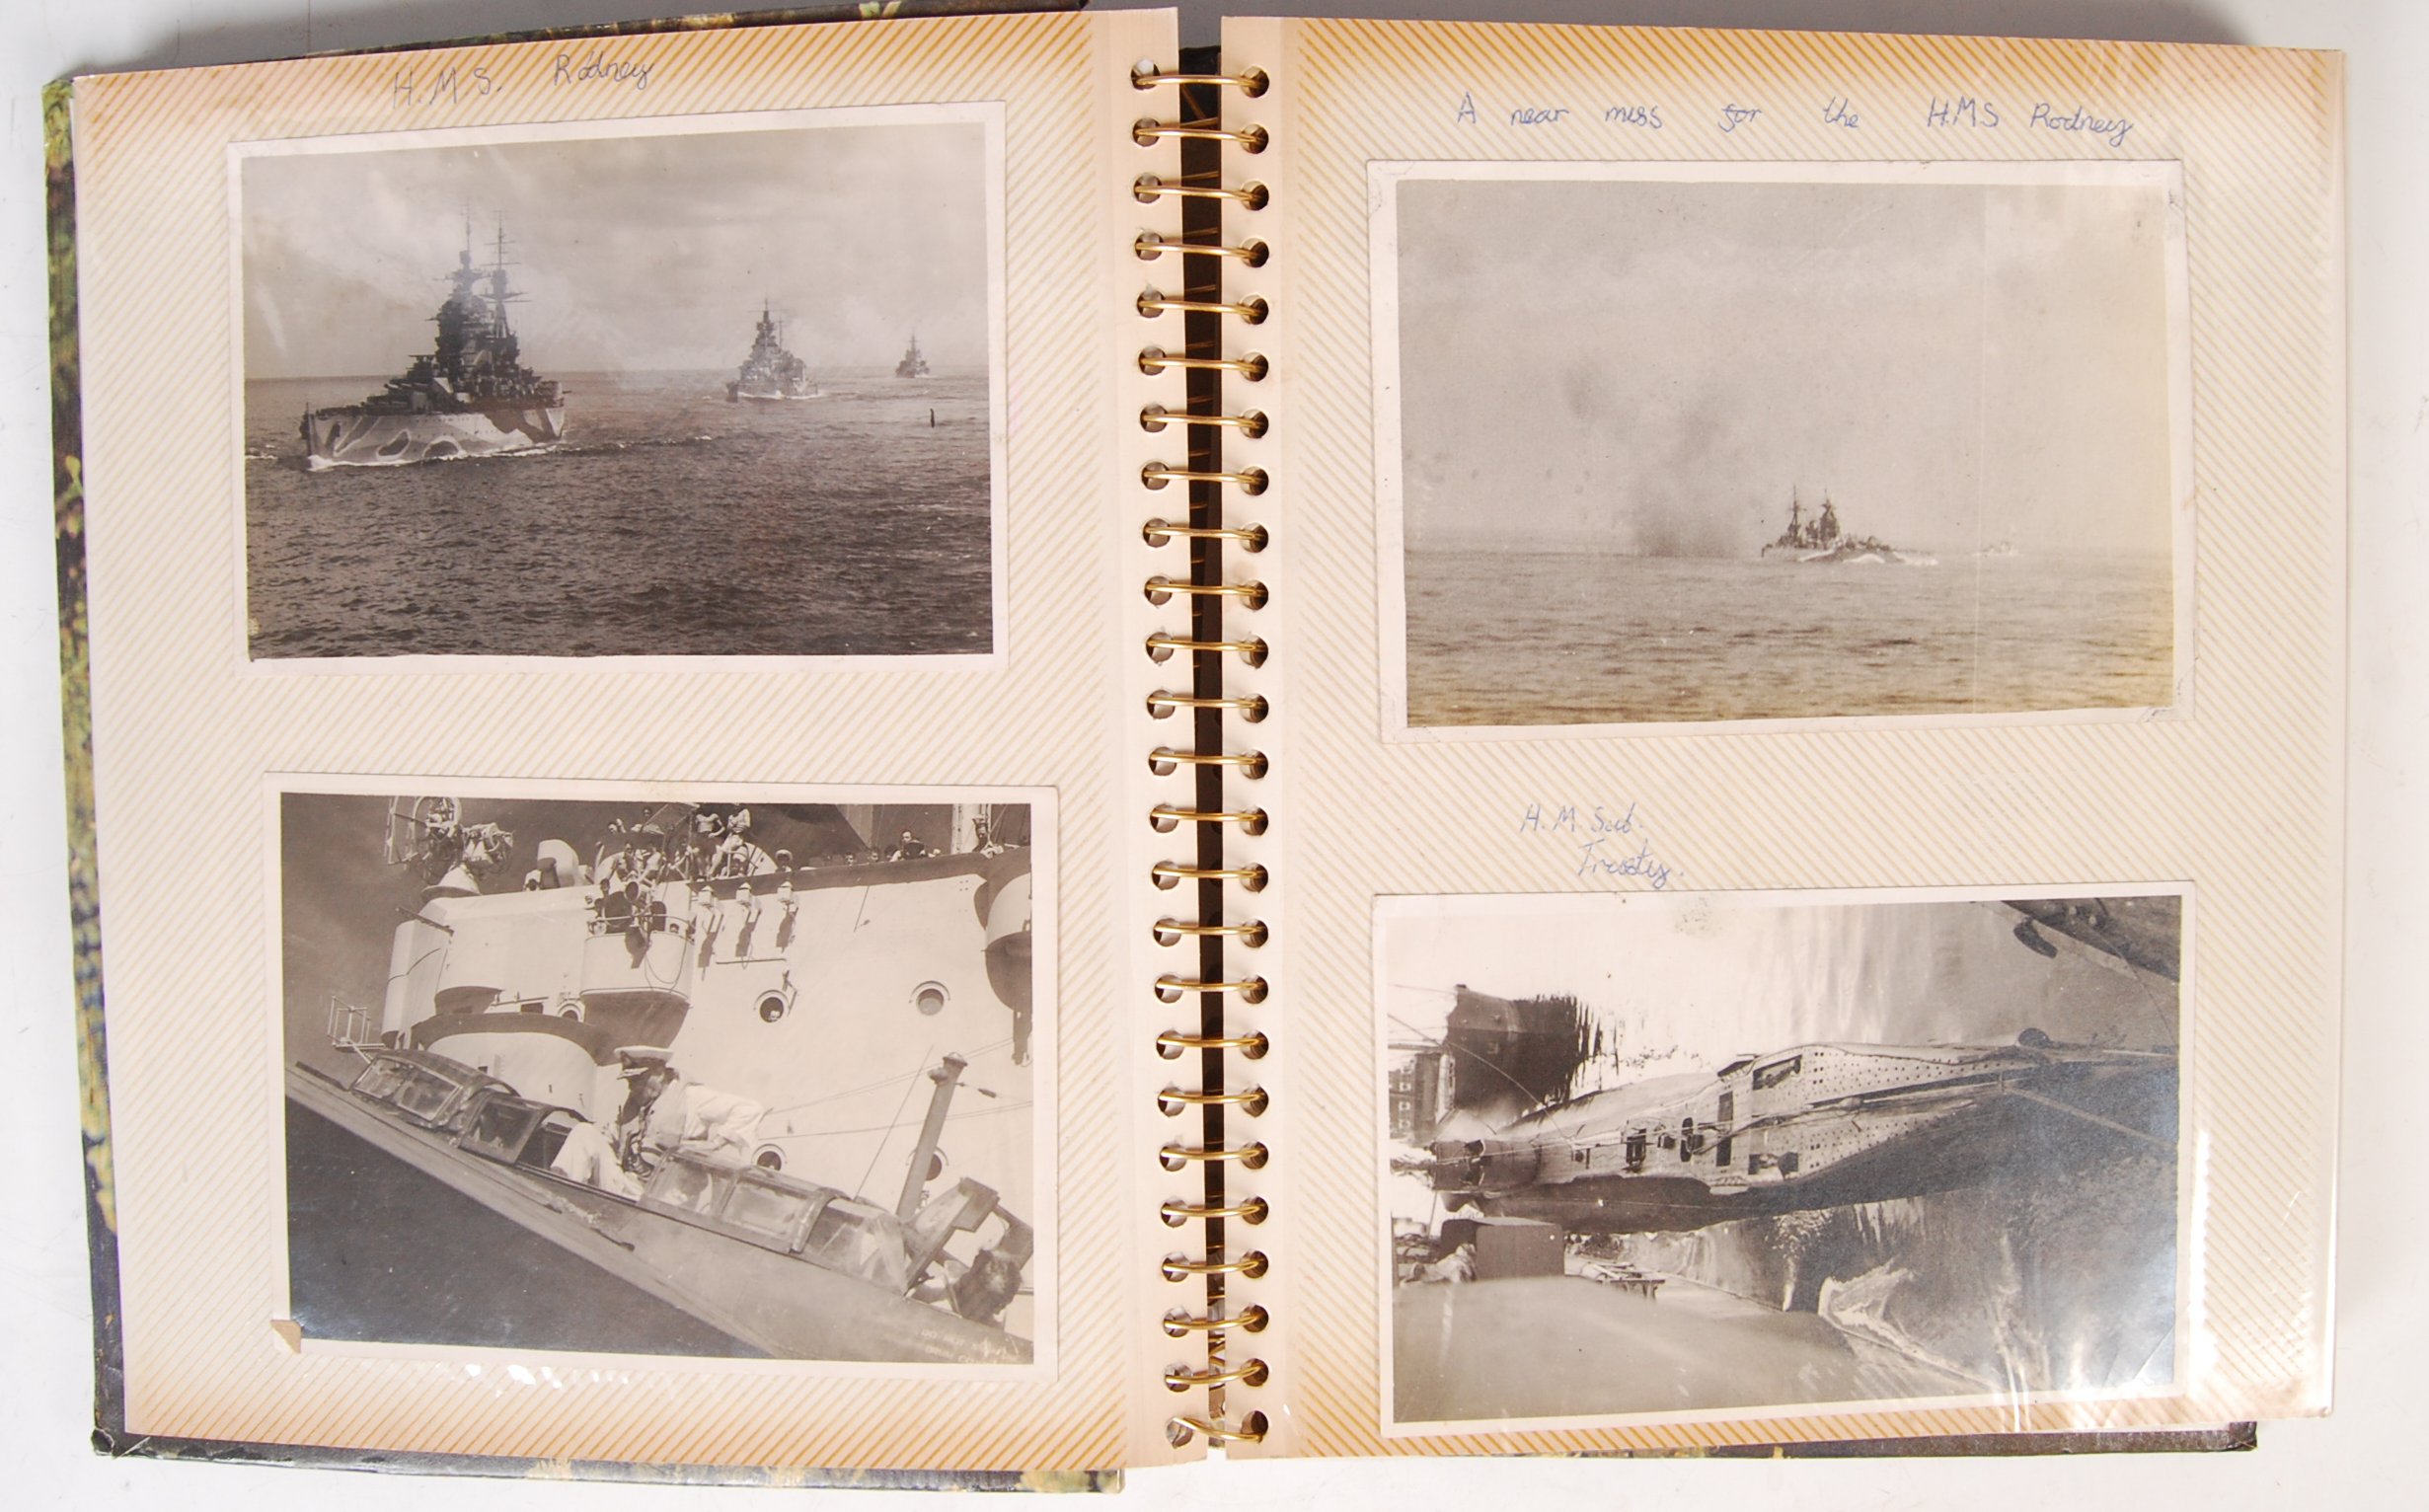 WWII PERSONAL PHOTOGRAPH ALBUM - HMS INDOMITABLE ETC